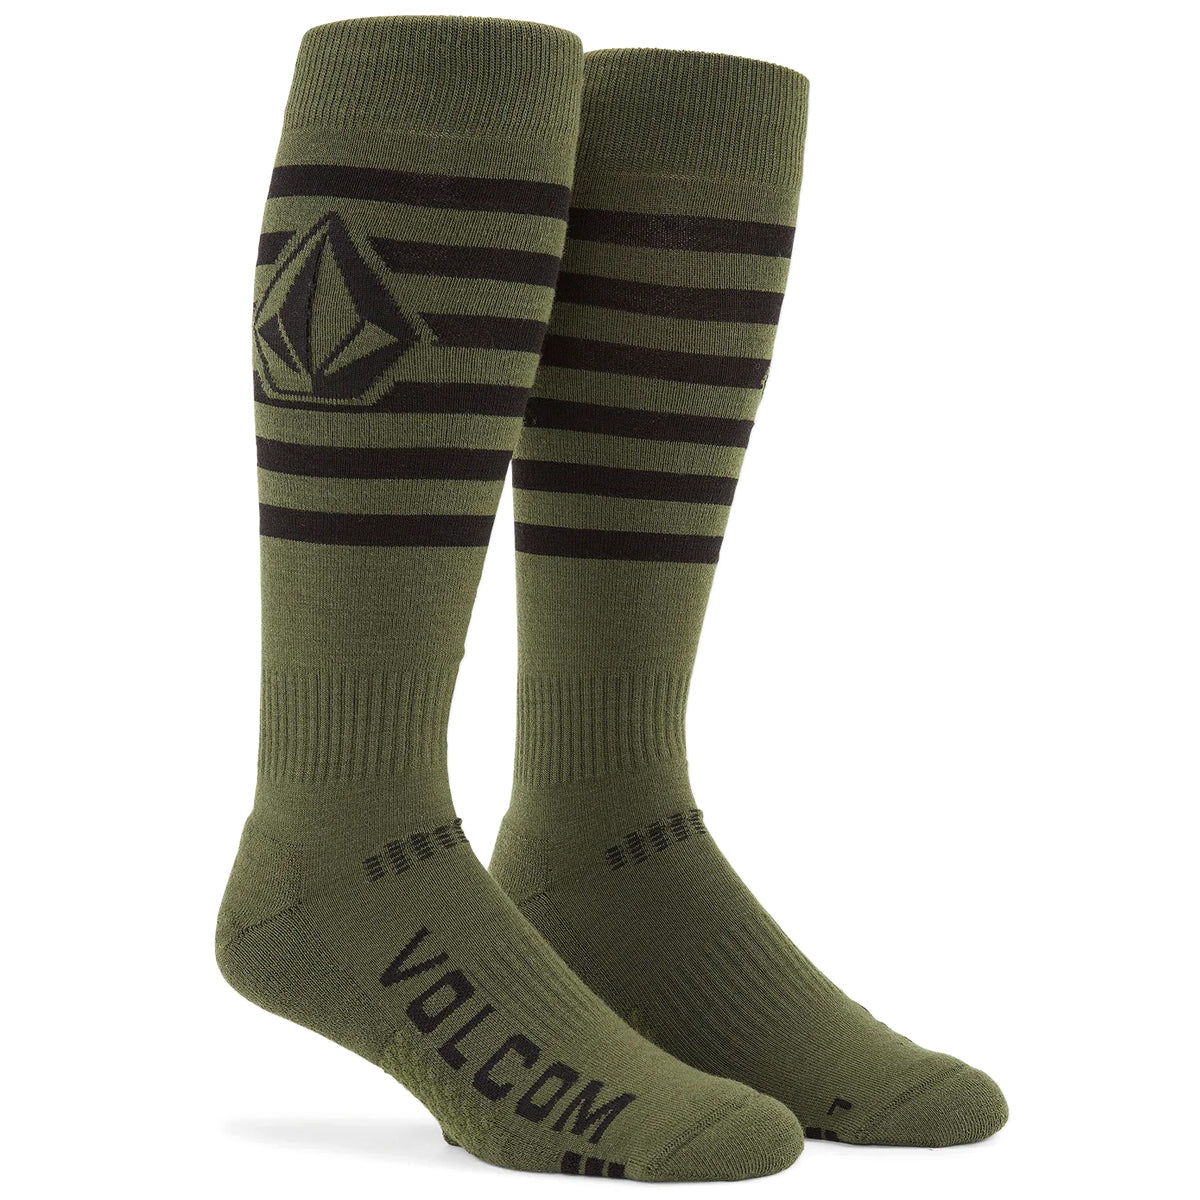 Volcom Kootney Snowboard Socks - Military image 1